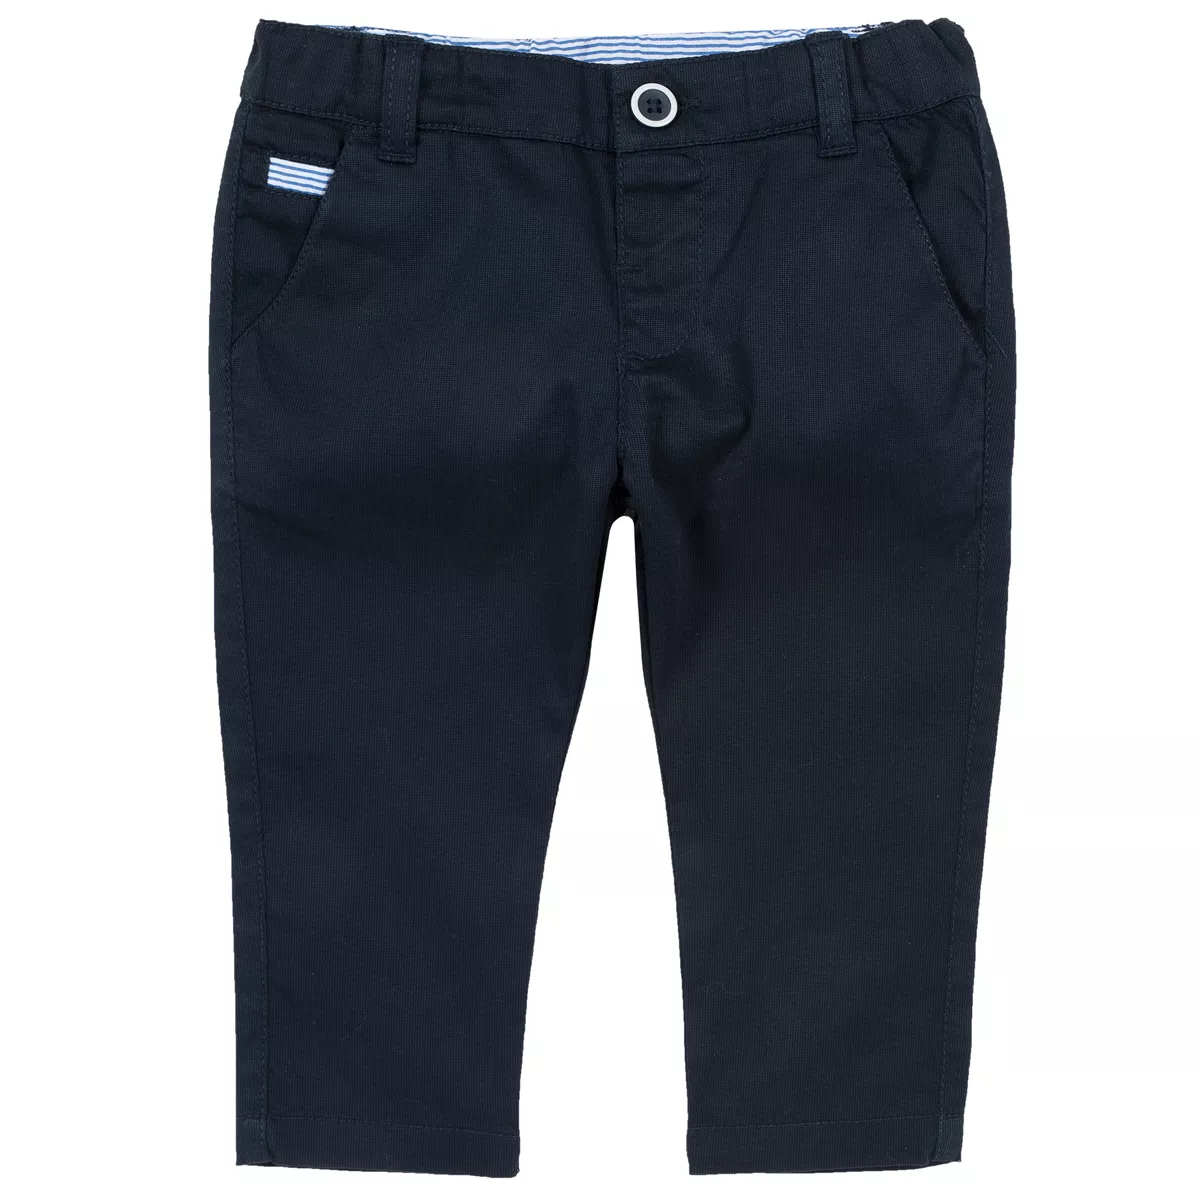 Pantaloni lungi copii Chicco, albastru inchis, 98